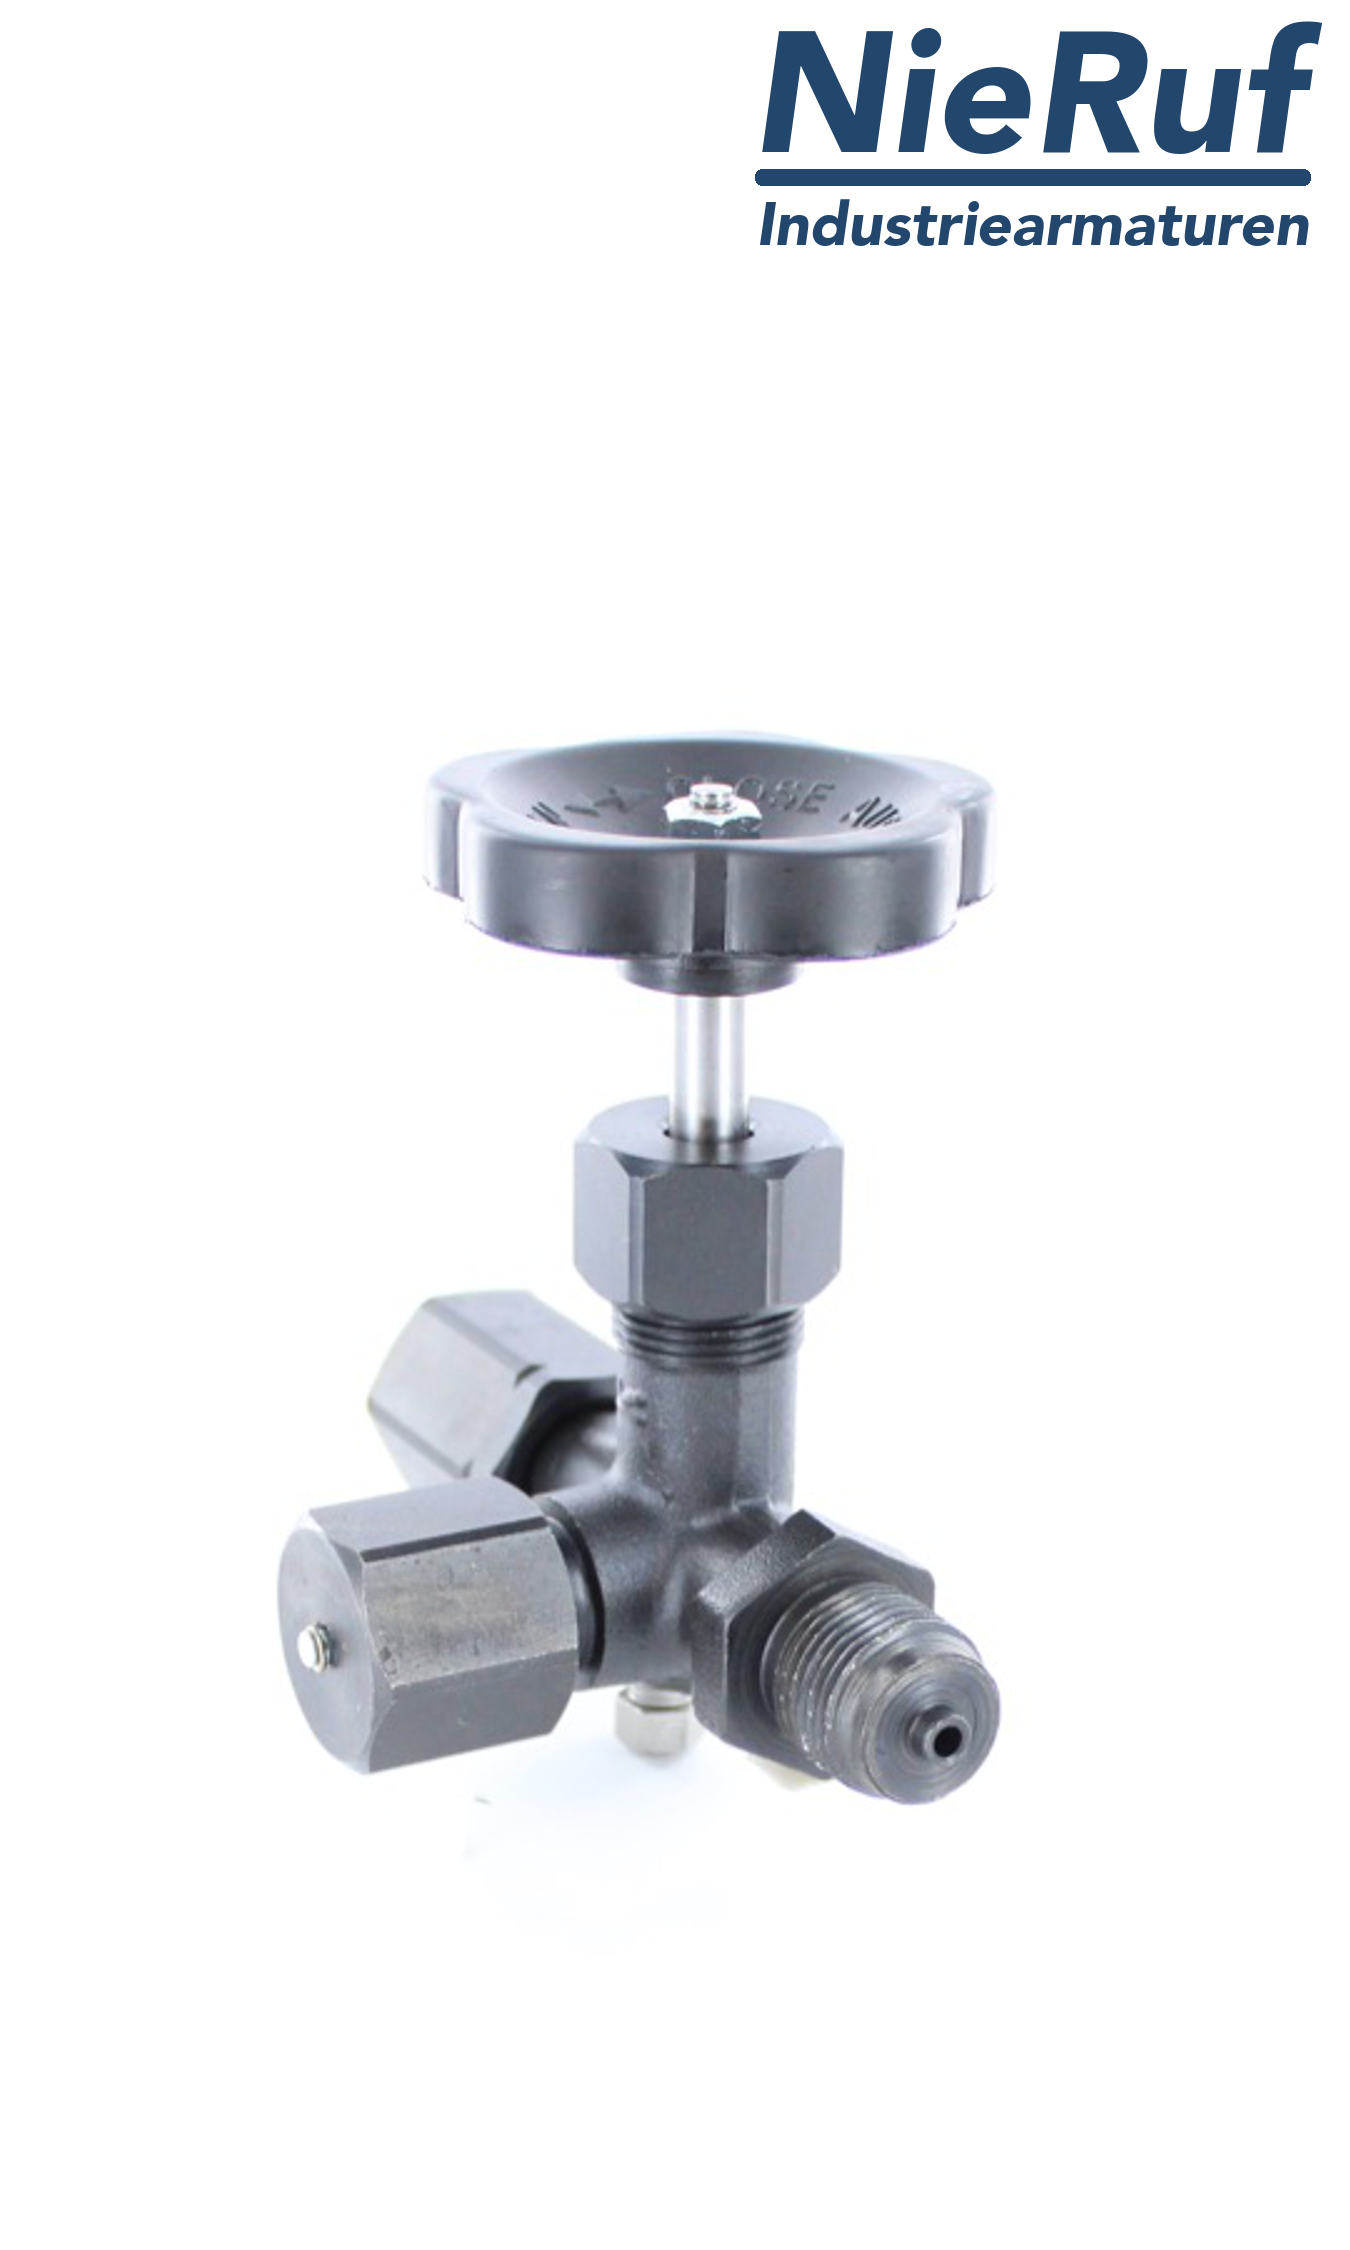 manometer gauge valves sleeve x sleeve x test connector M20x1,5 DIN 16271 steel 1.0460 400 bar